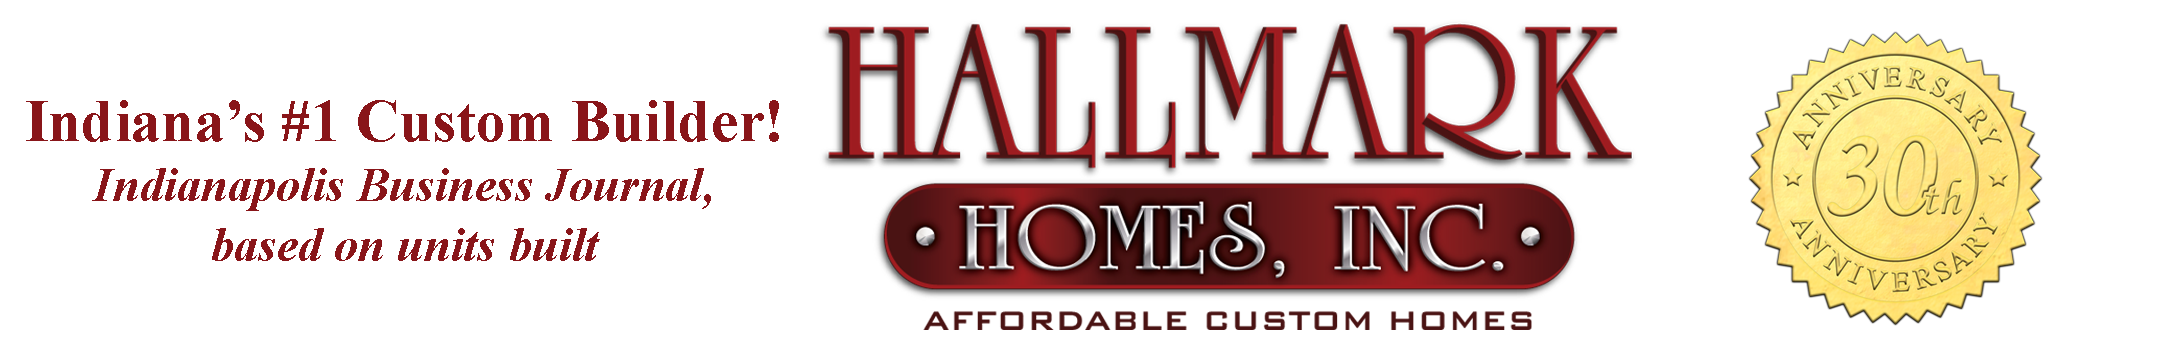 Hallmark Homes - Indiana's Leading "On Your Lot" Custom Builder!